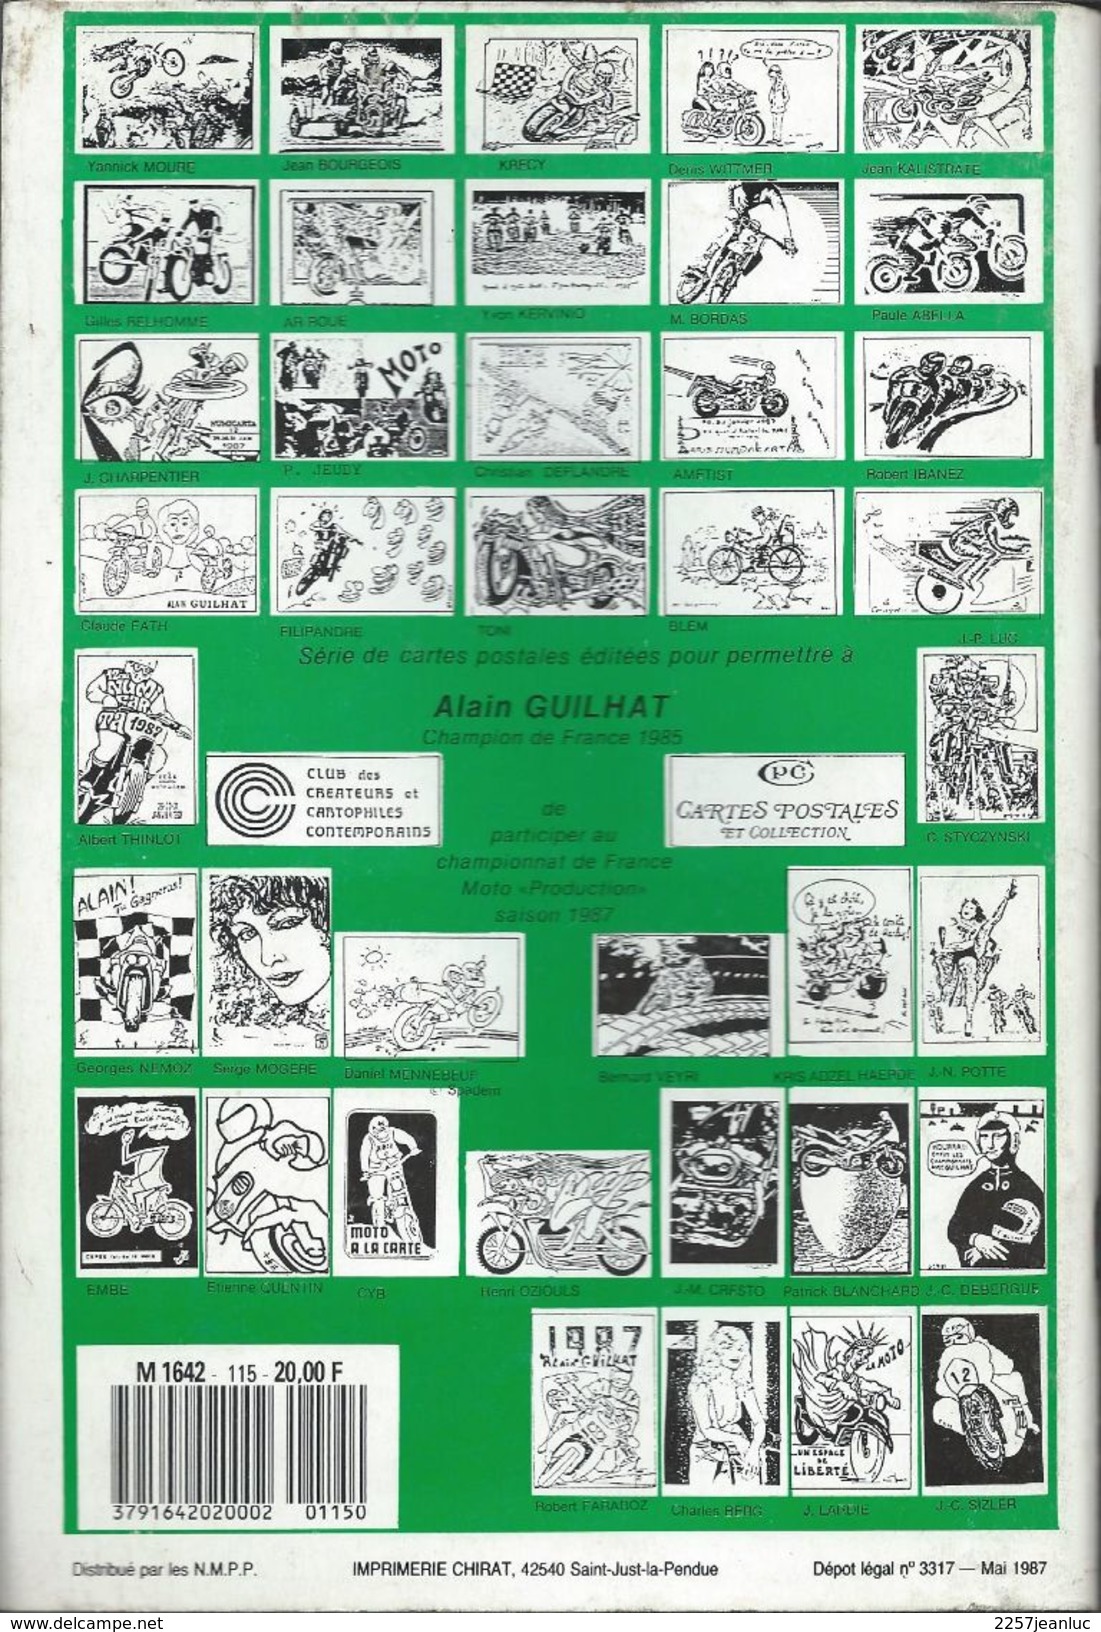 Cartes Postales Et Collections Juin1987  Magazines N: 115 Llustration &  Thèmes Divers 98 Pages - French